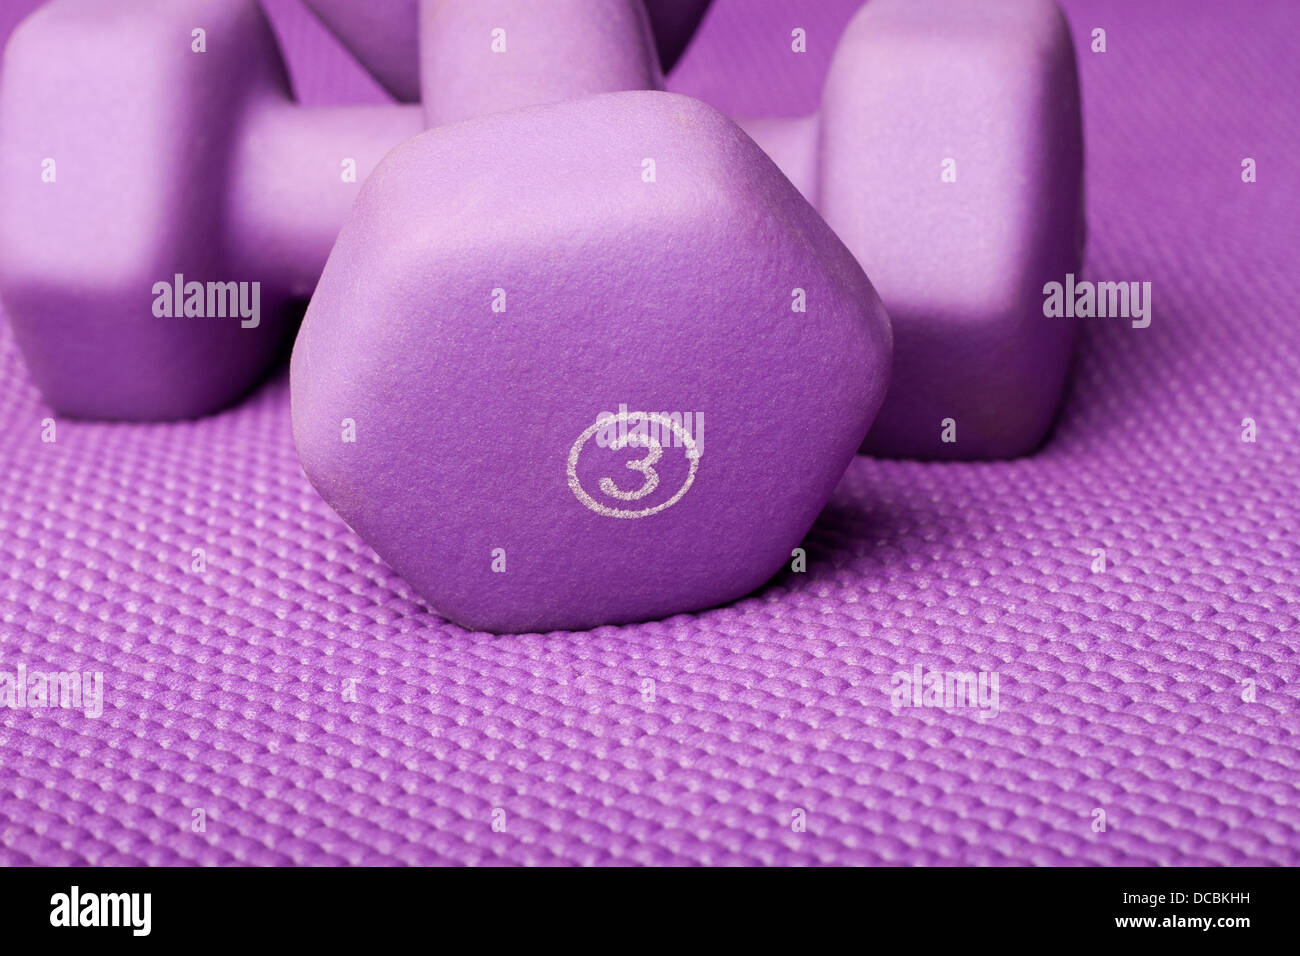 Three pound weight on a purple yoga mat Stock Photo